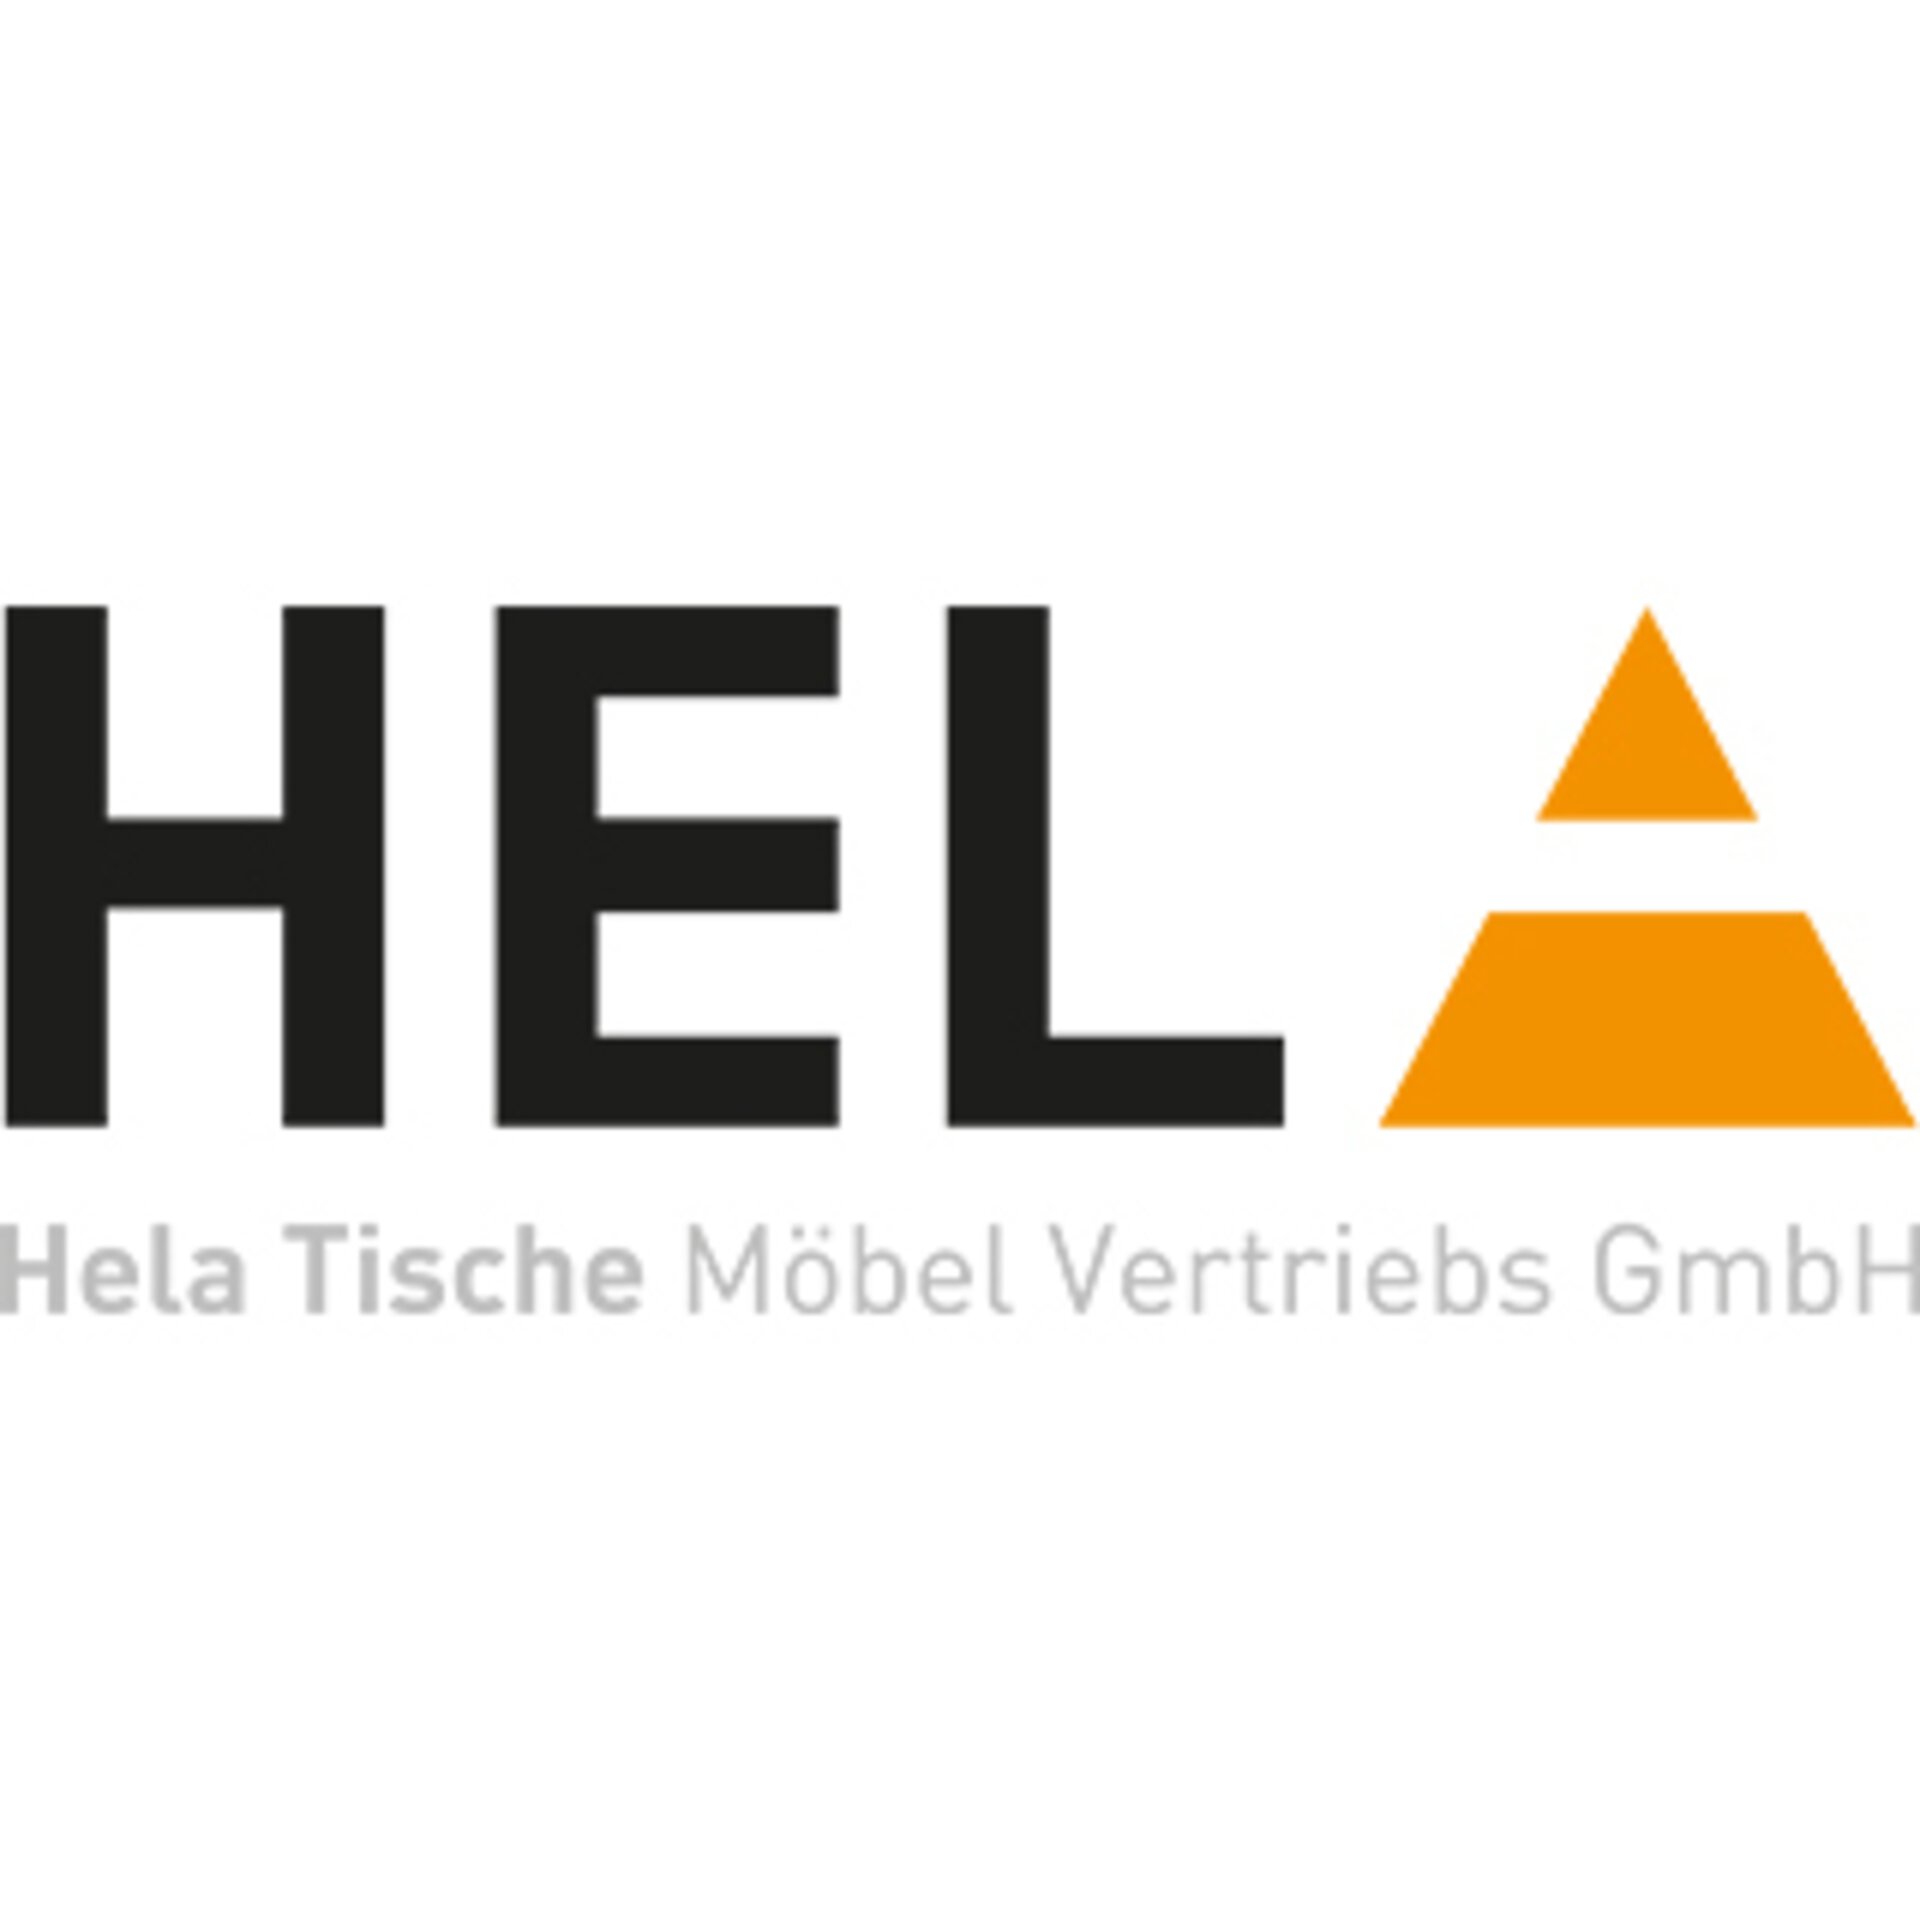 Logo "HELA - Hela Tische Möbel Vertriebs GmbH"